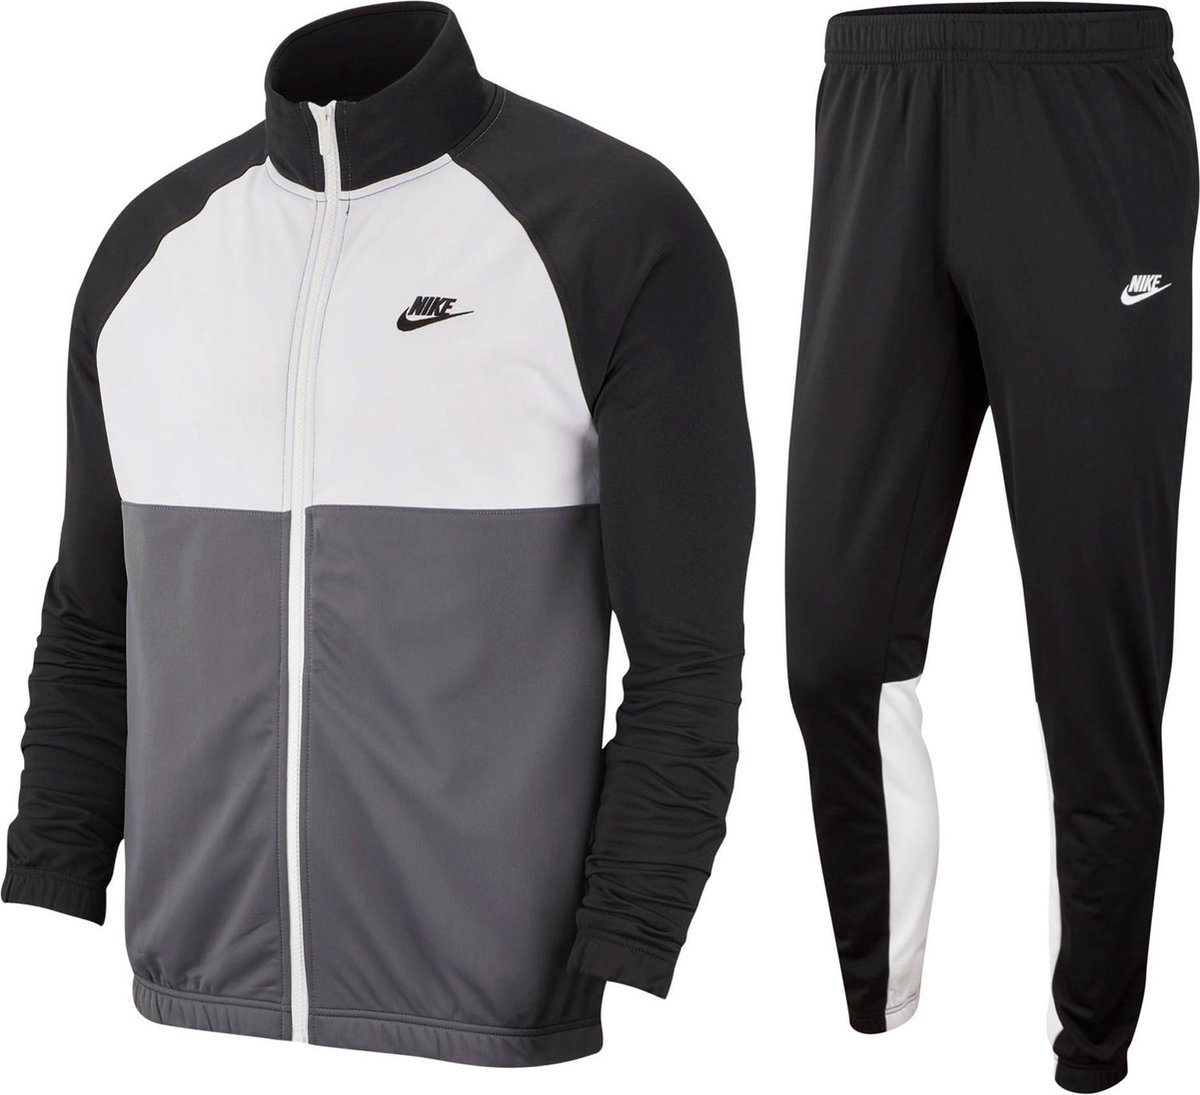 hel Vouwen lood Nike Trainingspak - Maat S - Mannen - zwart/wit/grijs | bol.com